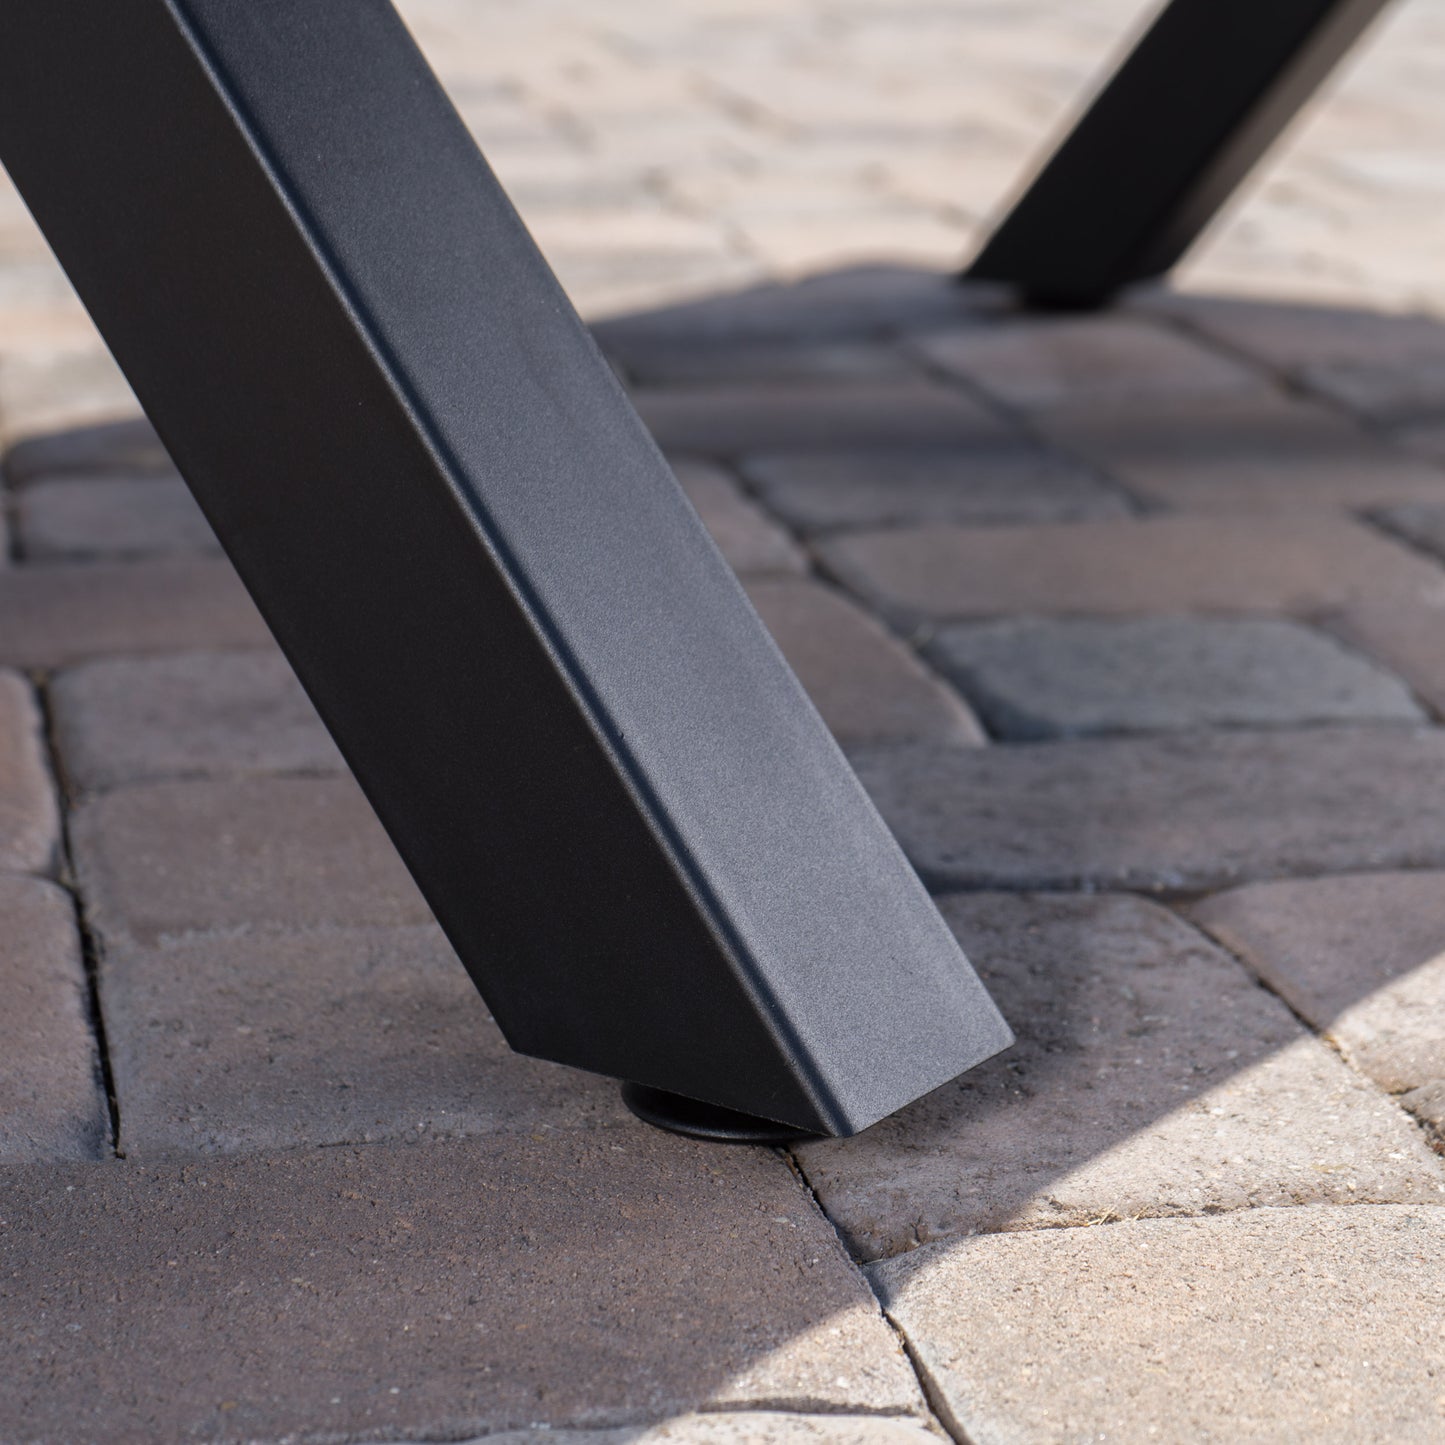 Galatian Outdoor White Lightweight Concrete Dining Table w/ Black Iron Legs